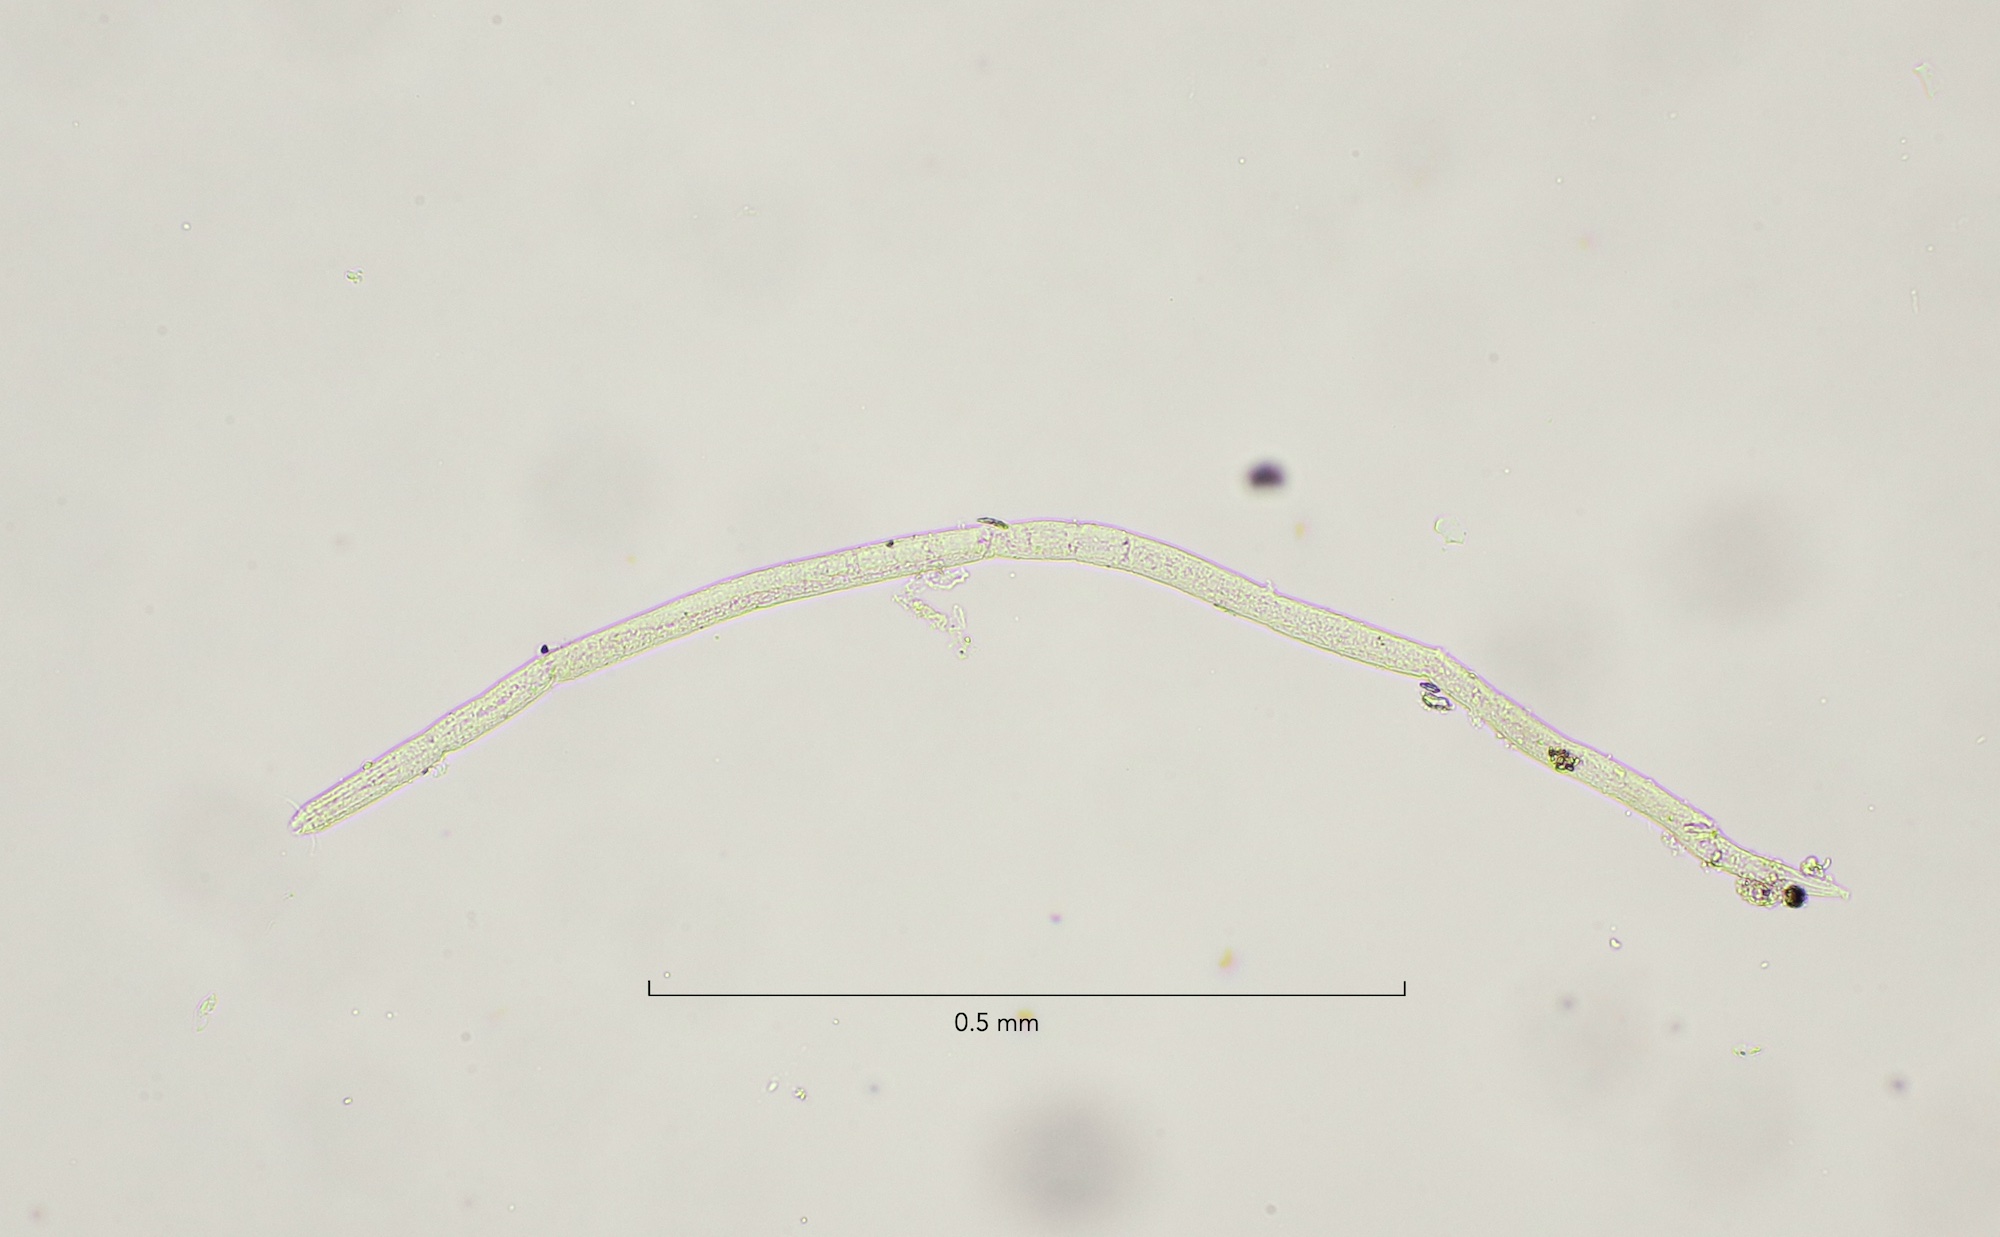 Bathylaimus stenolaimus, male overview 10x objective, Egmond aan Zee 24-4-2021